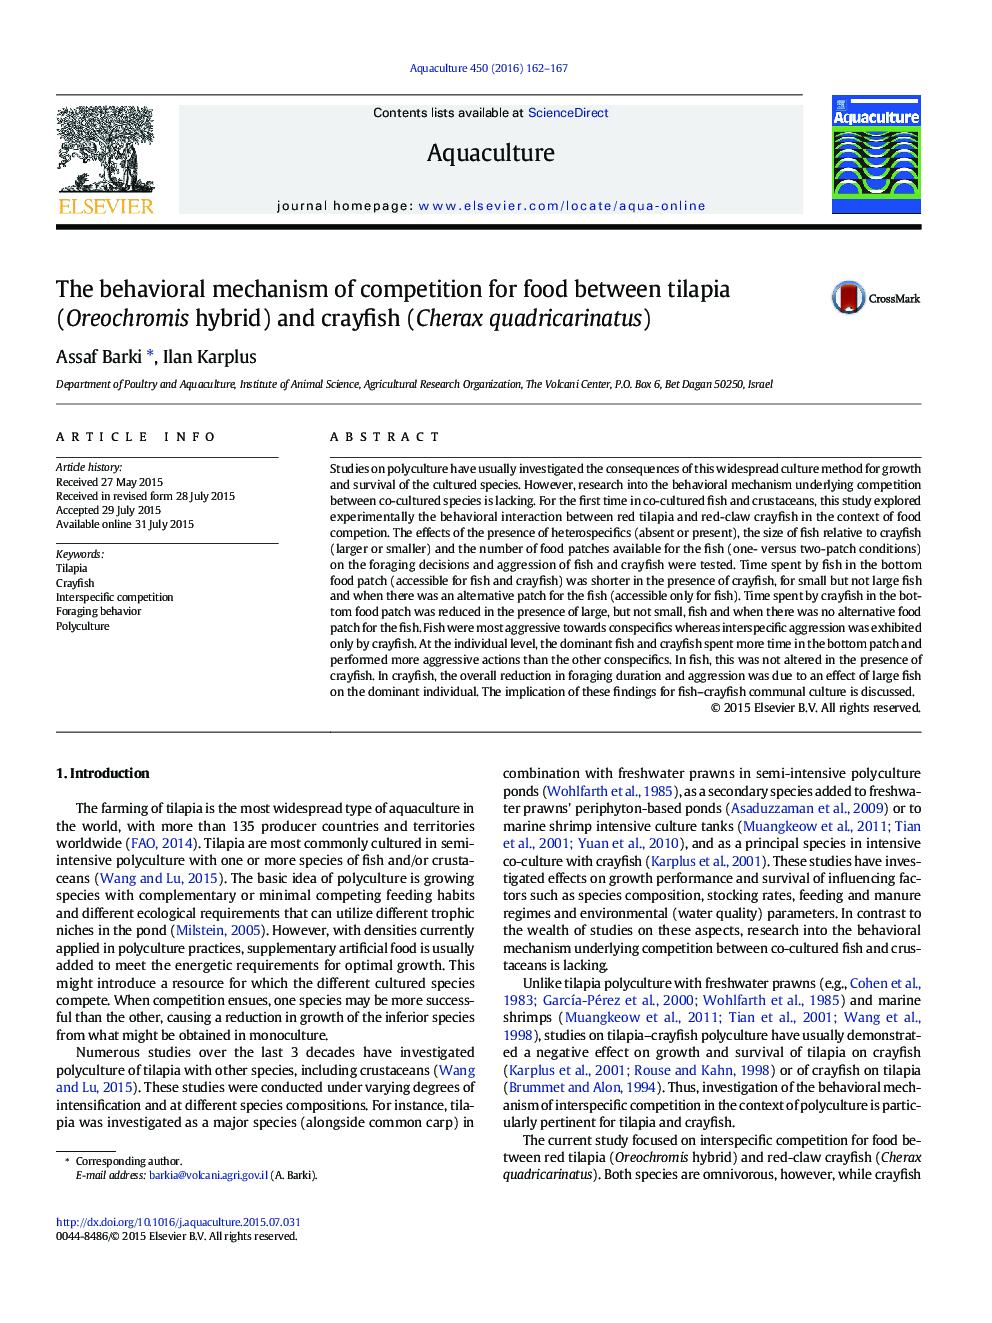 The behavioral mechanism of competition for food between tilapia (Oreochromis hybrid) and crayfish (Cherax quadricarinatus)